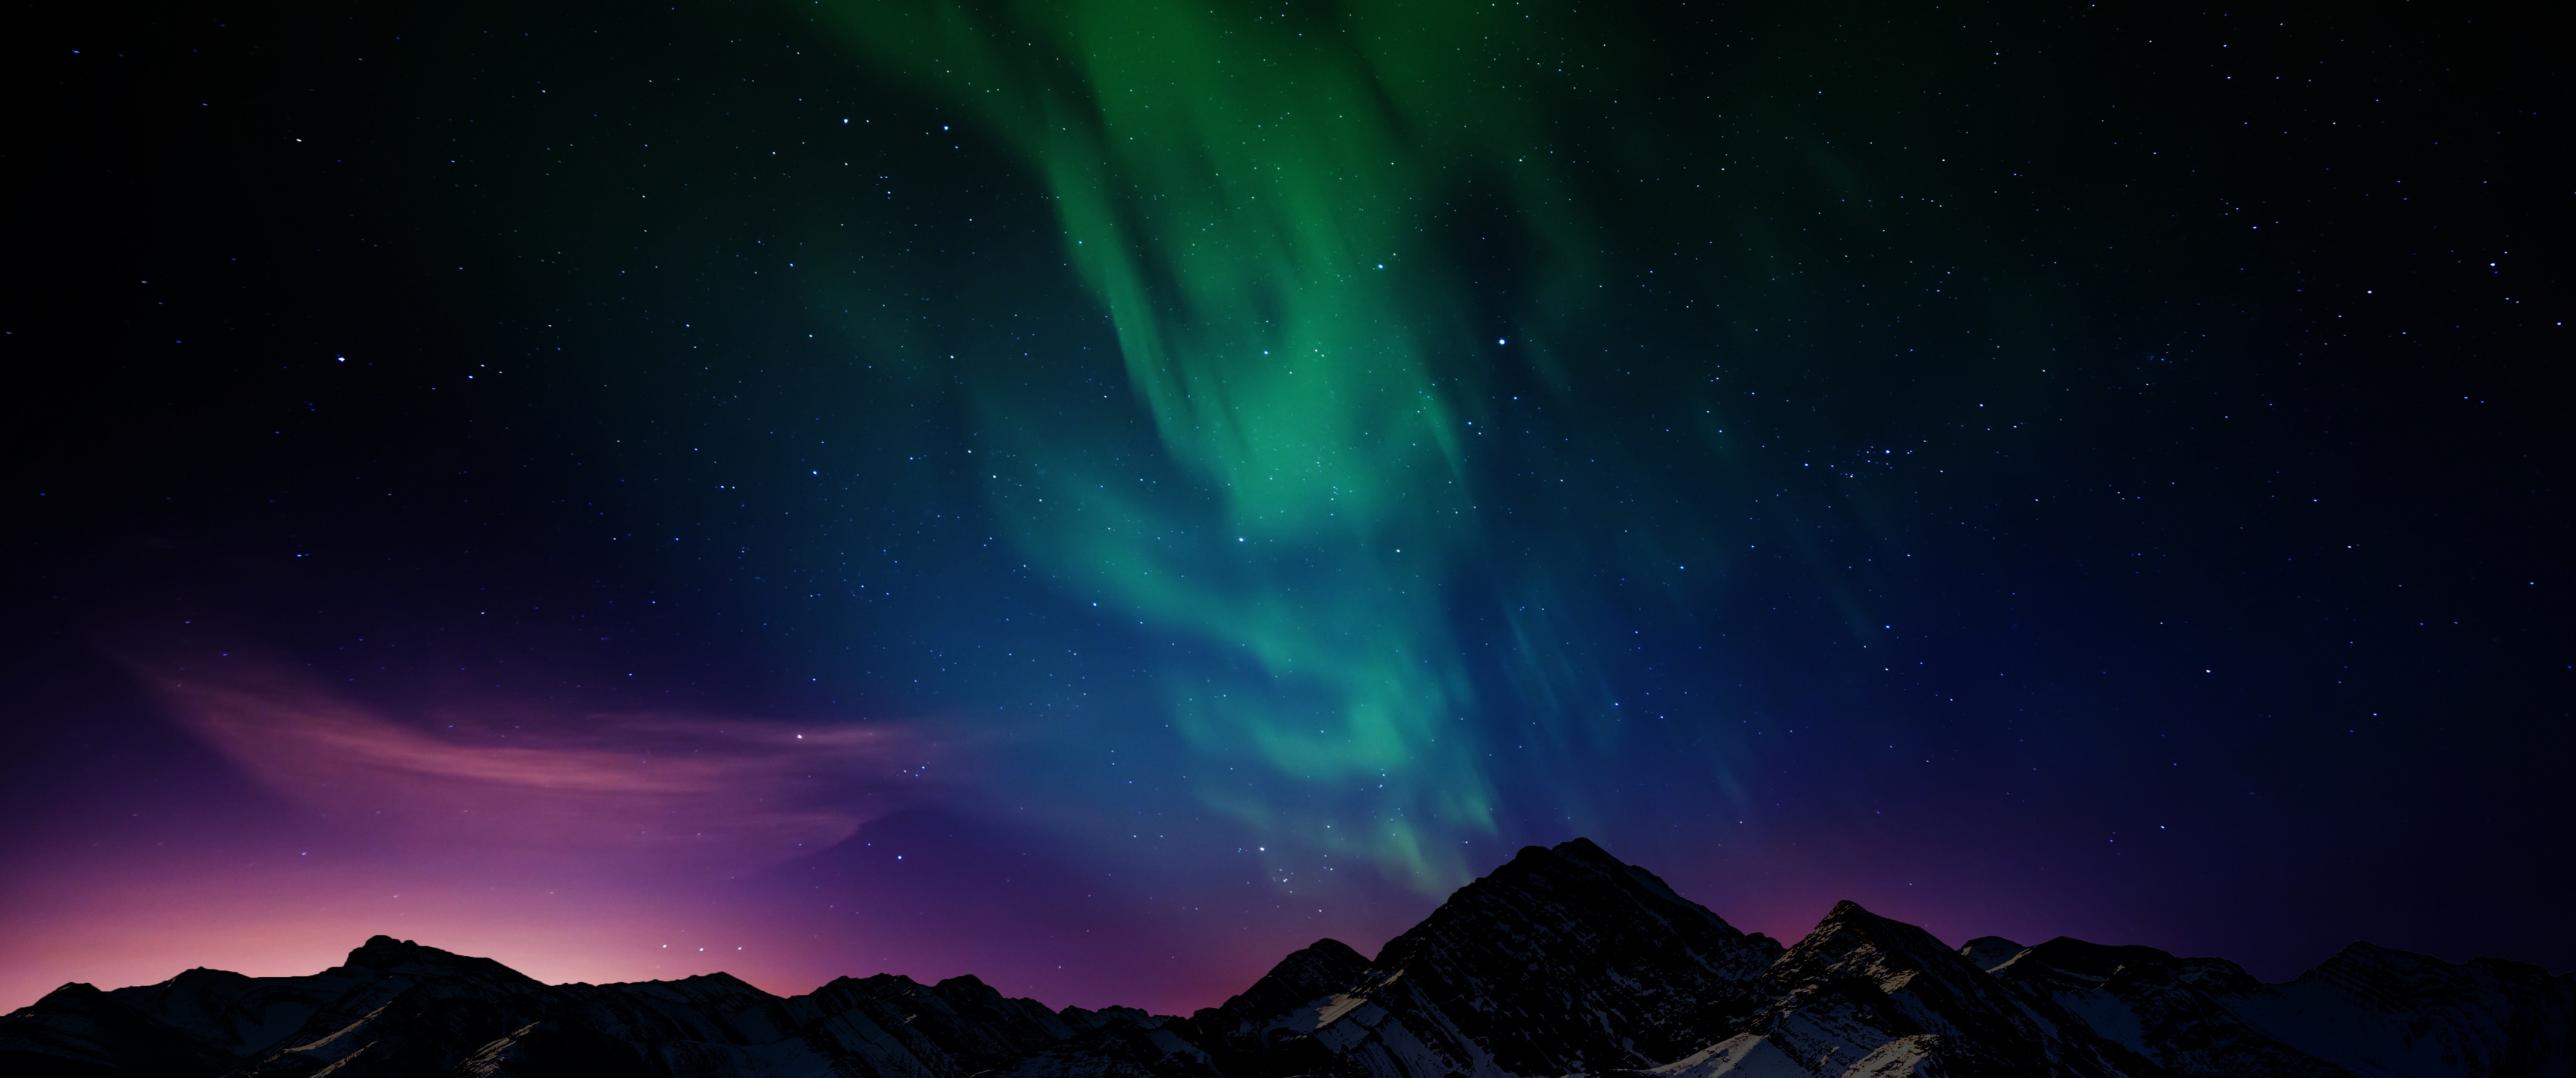 Best 500 Northern Lights Wallpapers  Download Free Images On Unsplash